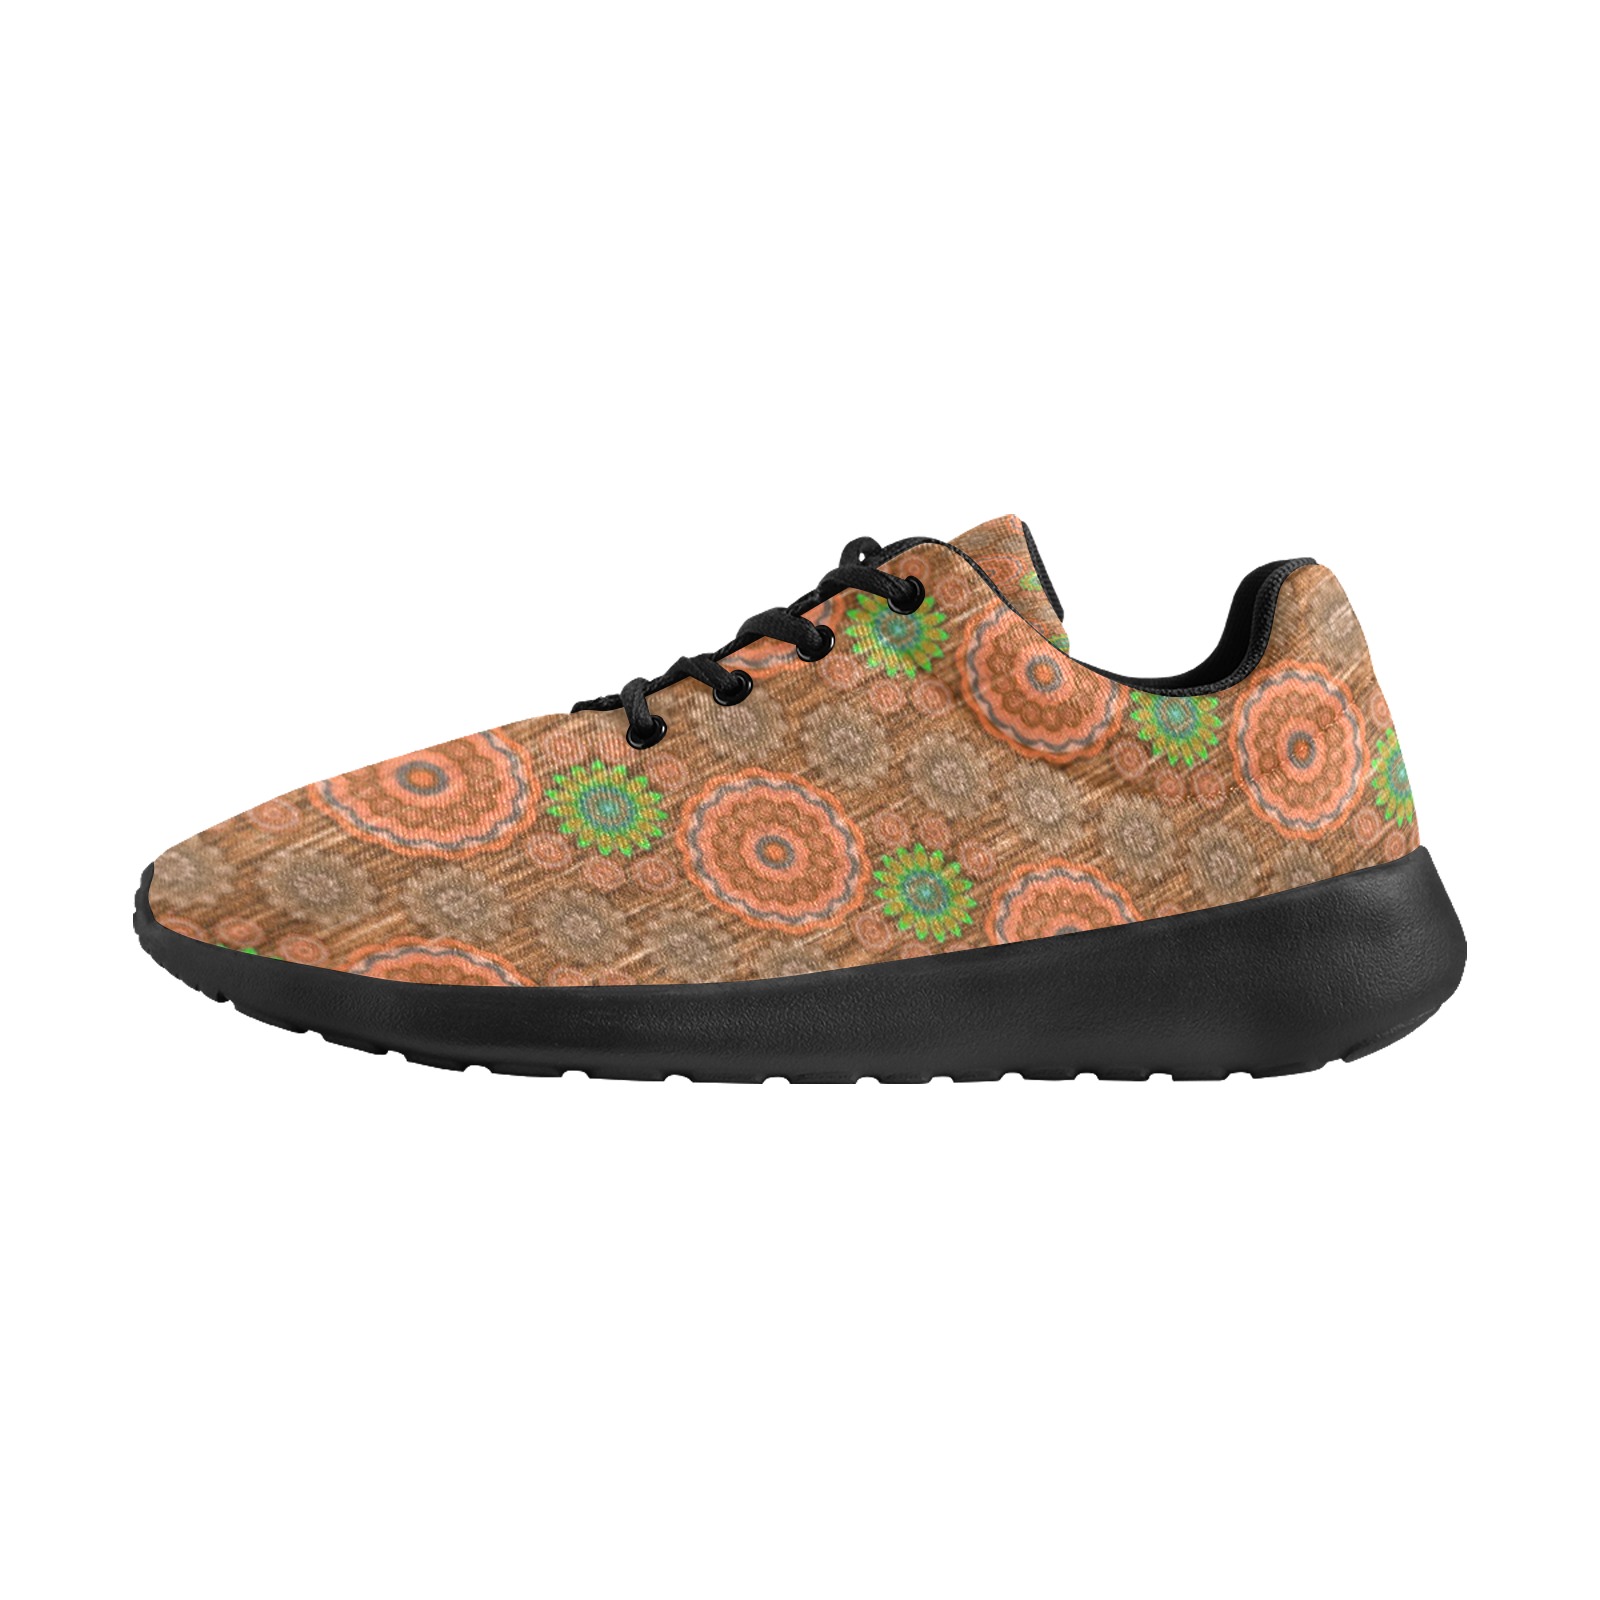 The Orange floral rainy scatter fibers textured Men's Athletic Shoes (Model 0200)